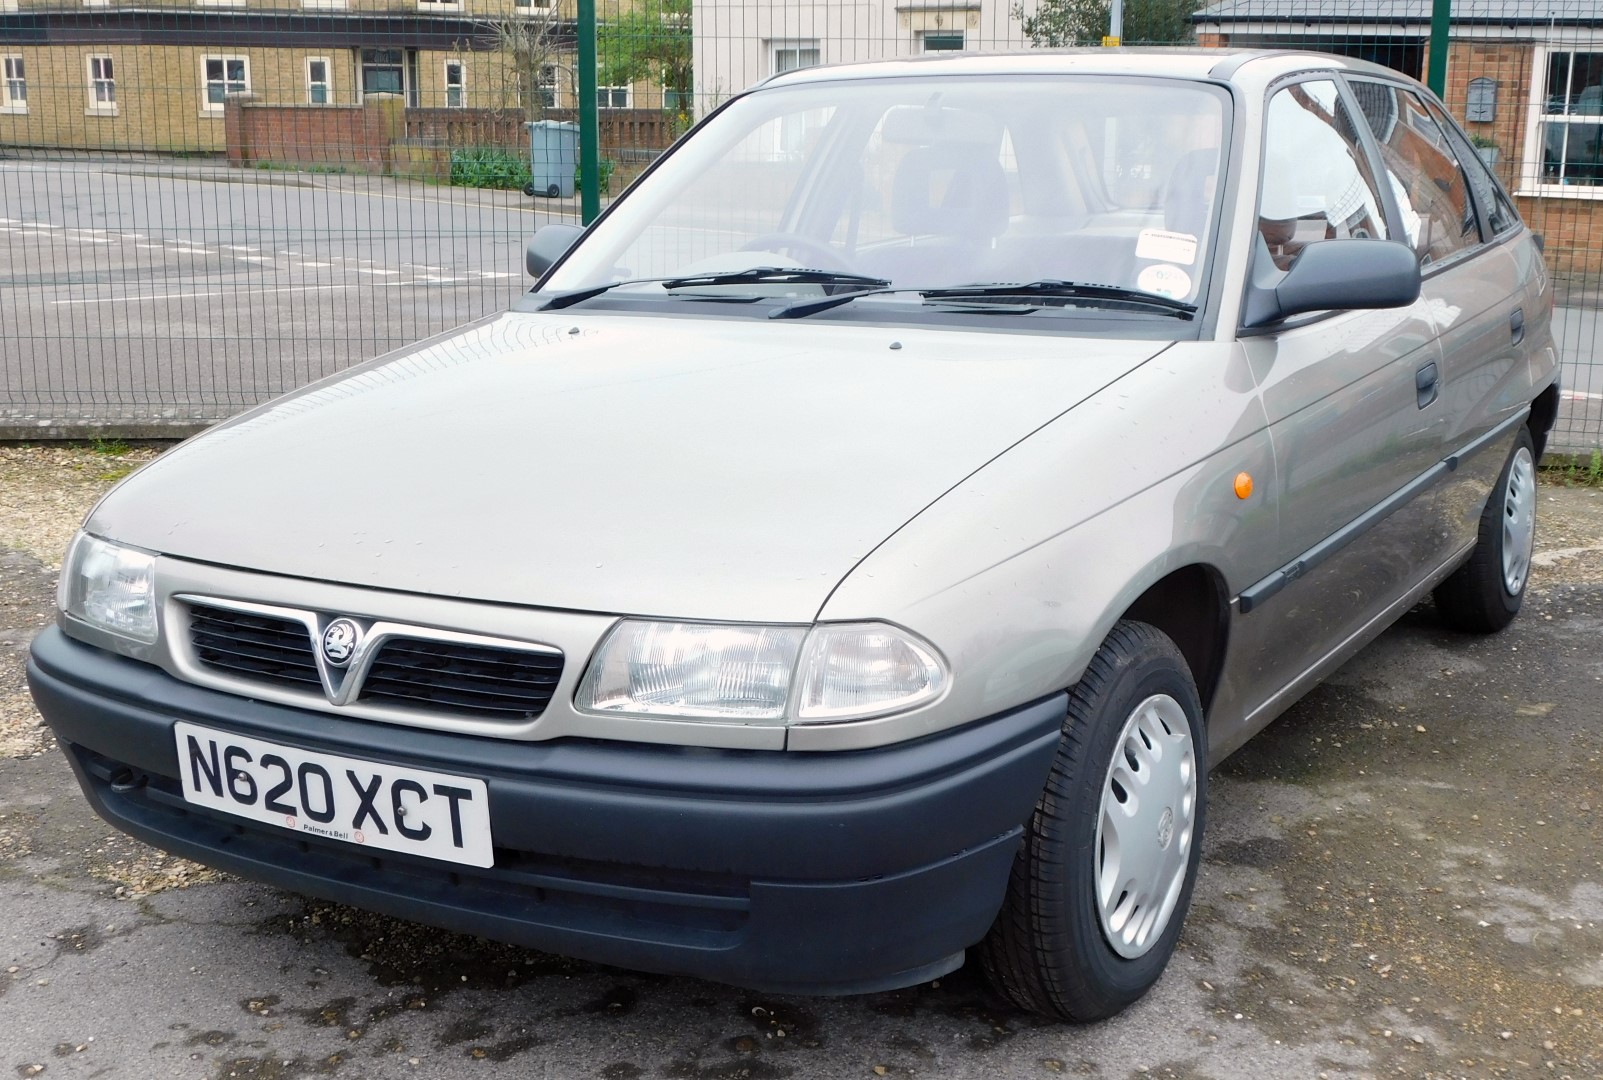 A Vauxhall Astra Merit, Registration N620 XCT, 5 door hatchback, manual, petrol, silver, first regis